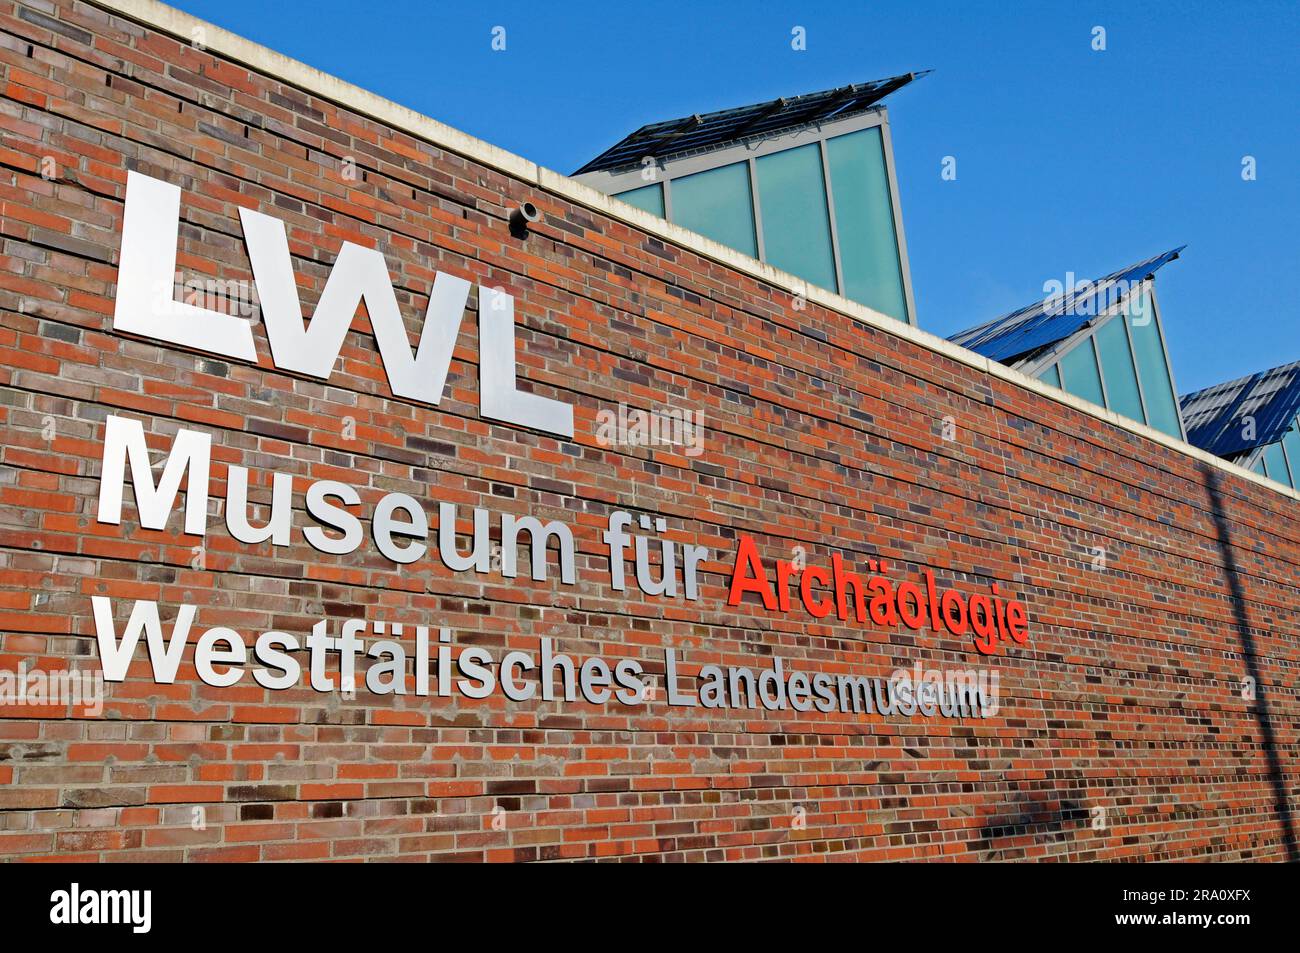 Lettering, Landschaftsverband Westfalen-Lippe, LWL Museum fuer Archaeologie, Westfaelisches Landesmuseum, Herne, North Rhine-Westphalia, Germany Stock Photo